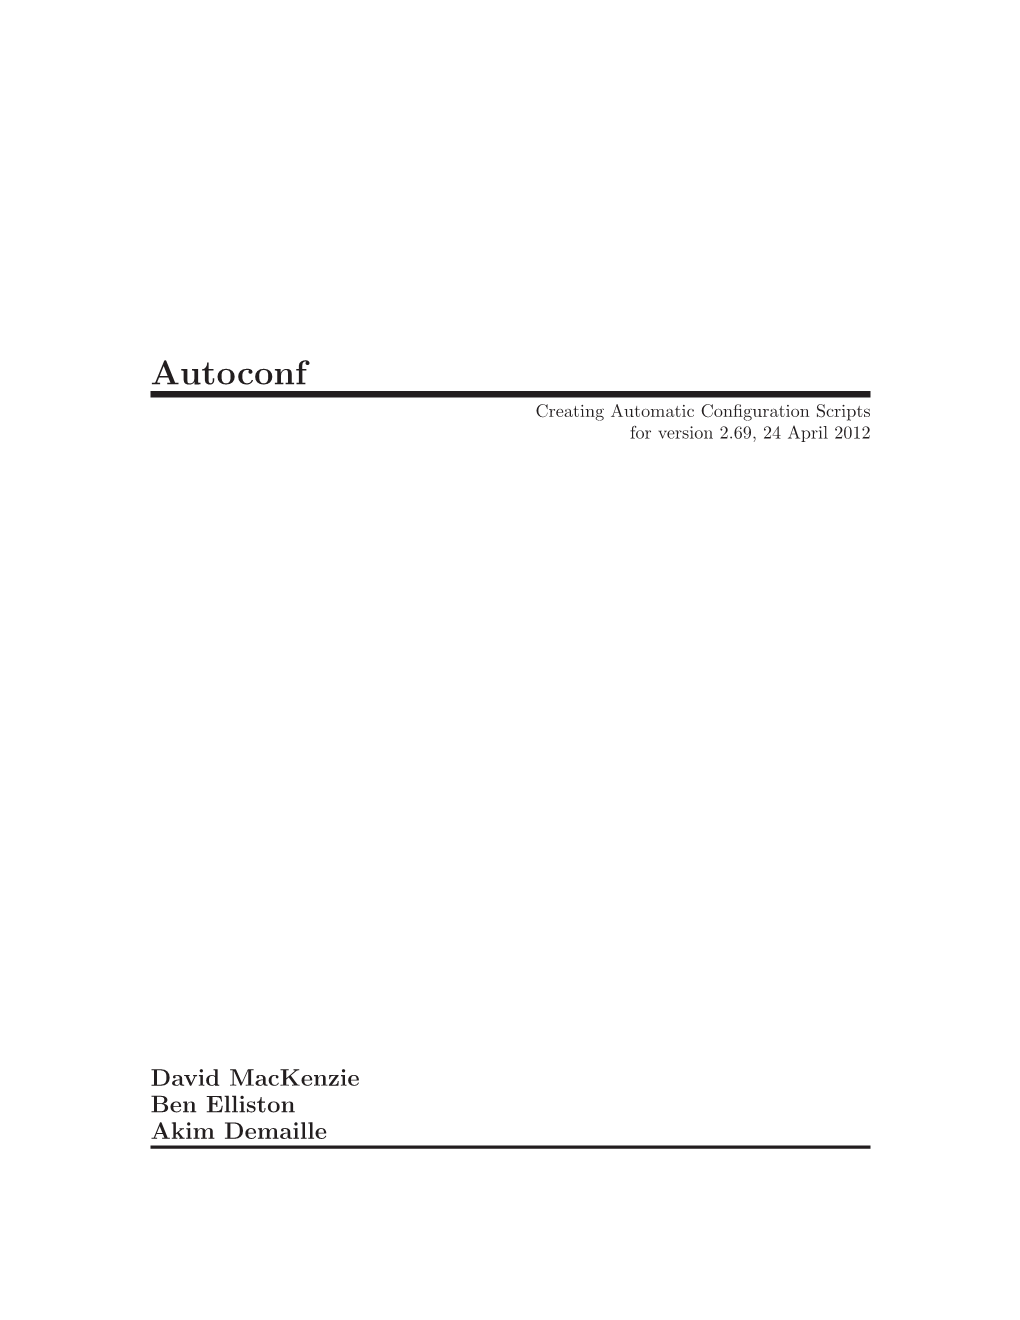 Autoconf Creating Automatic Configuration Scripts for Version 2.69, 24 April 2012